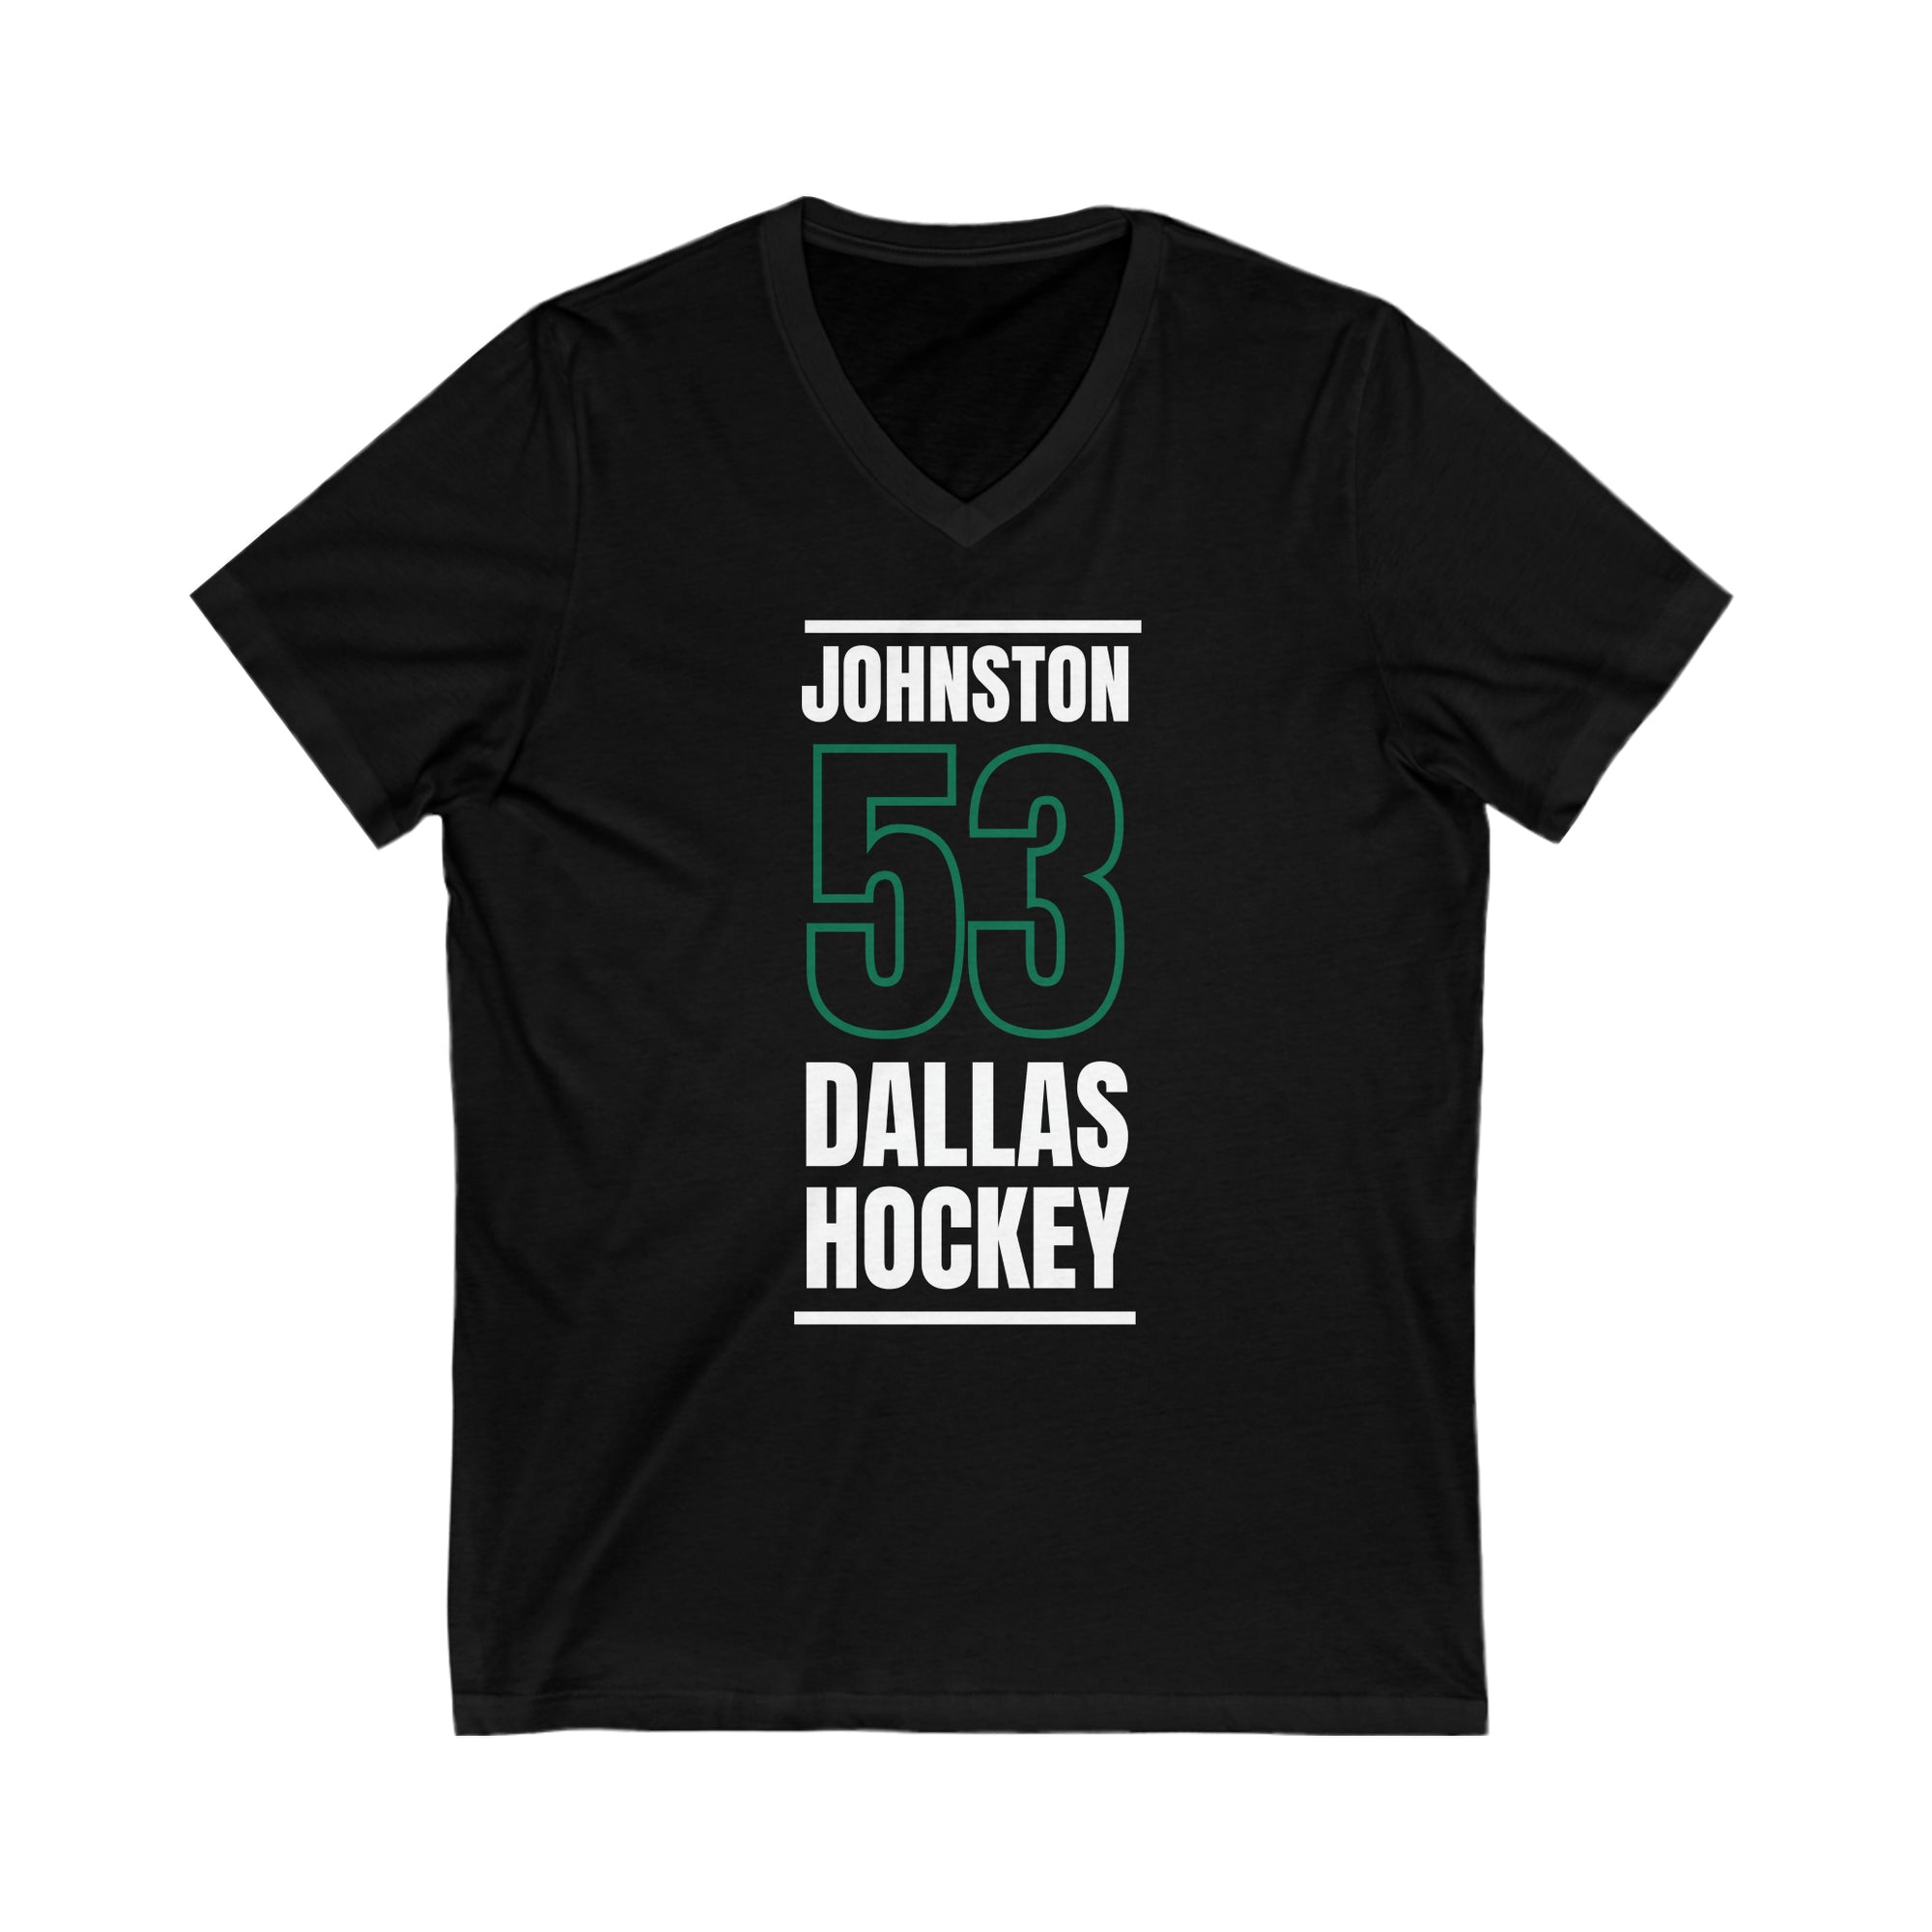 Johnston 53 Dallas Hockey Black Vertical Design Unisex V-Neck Tee